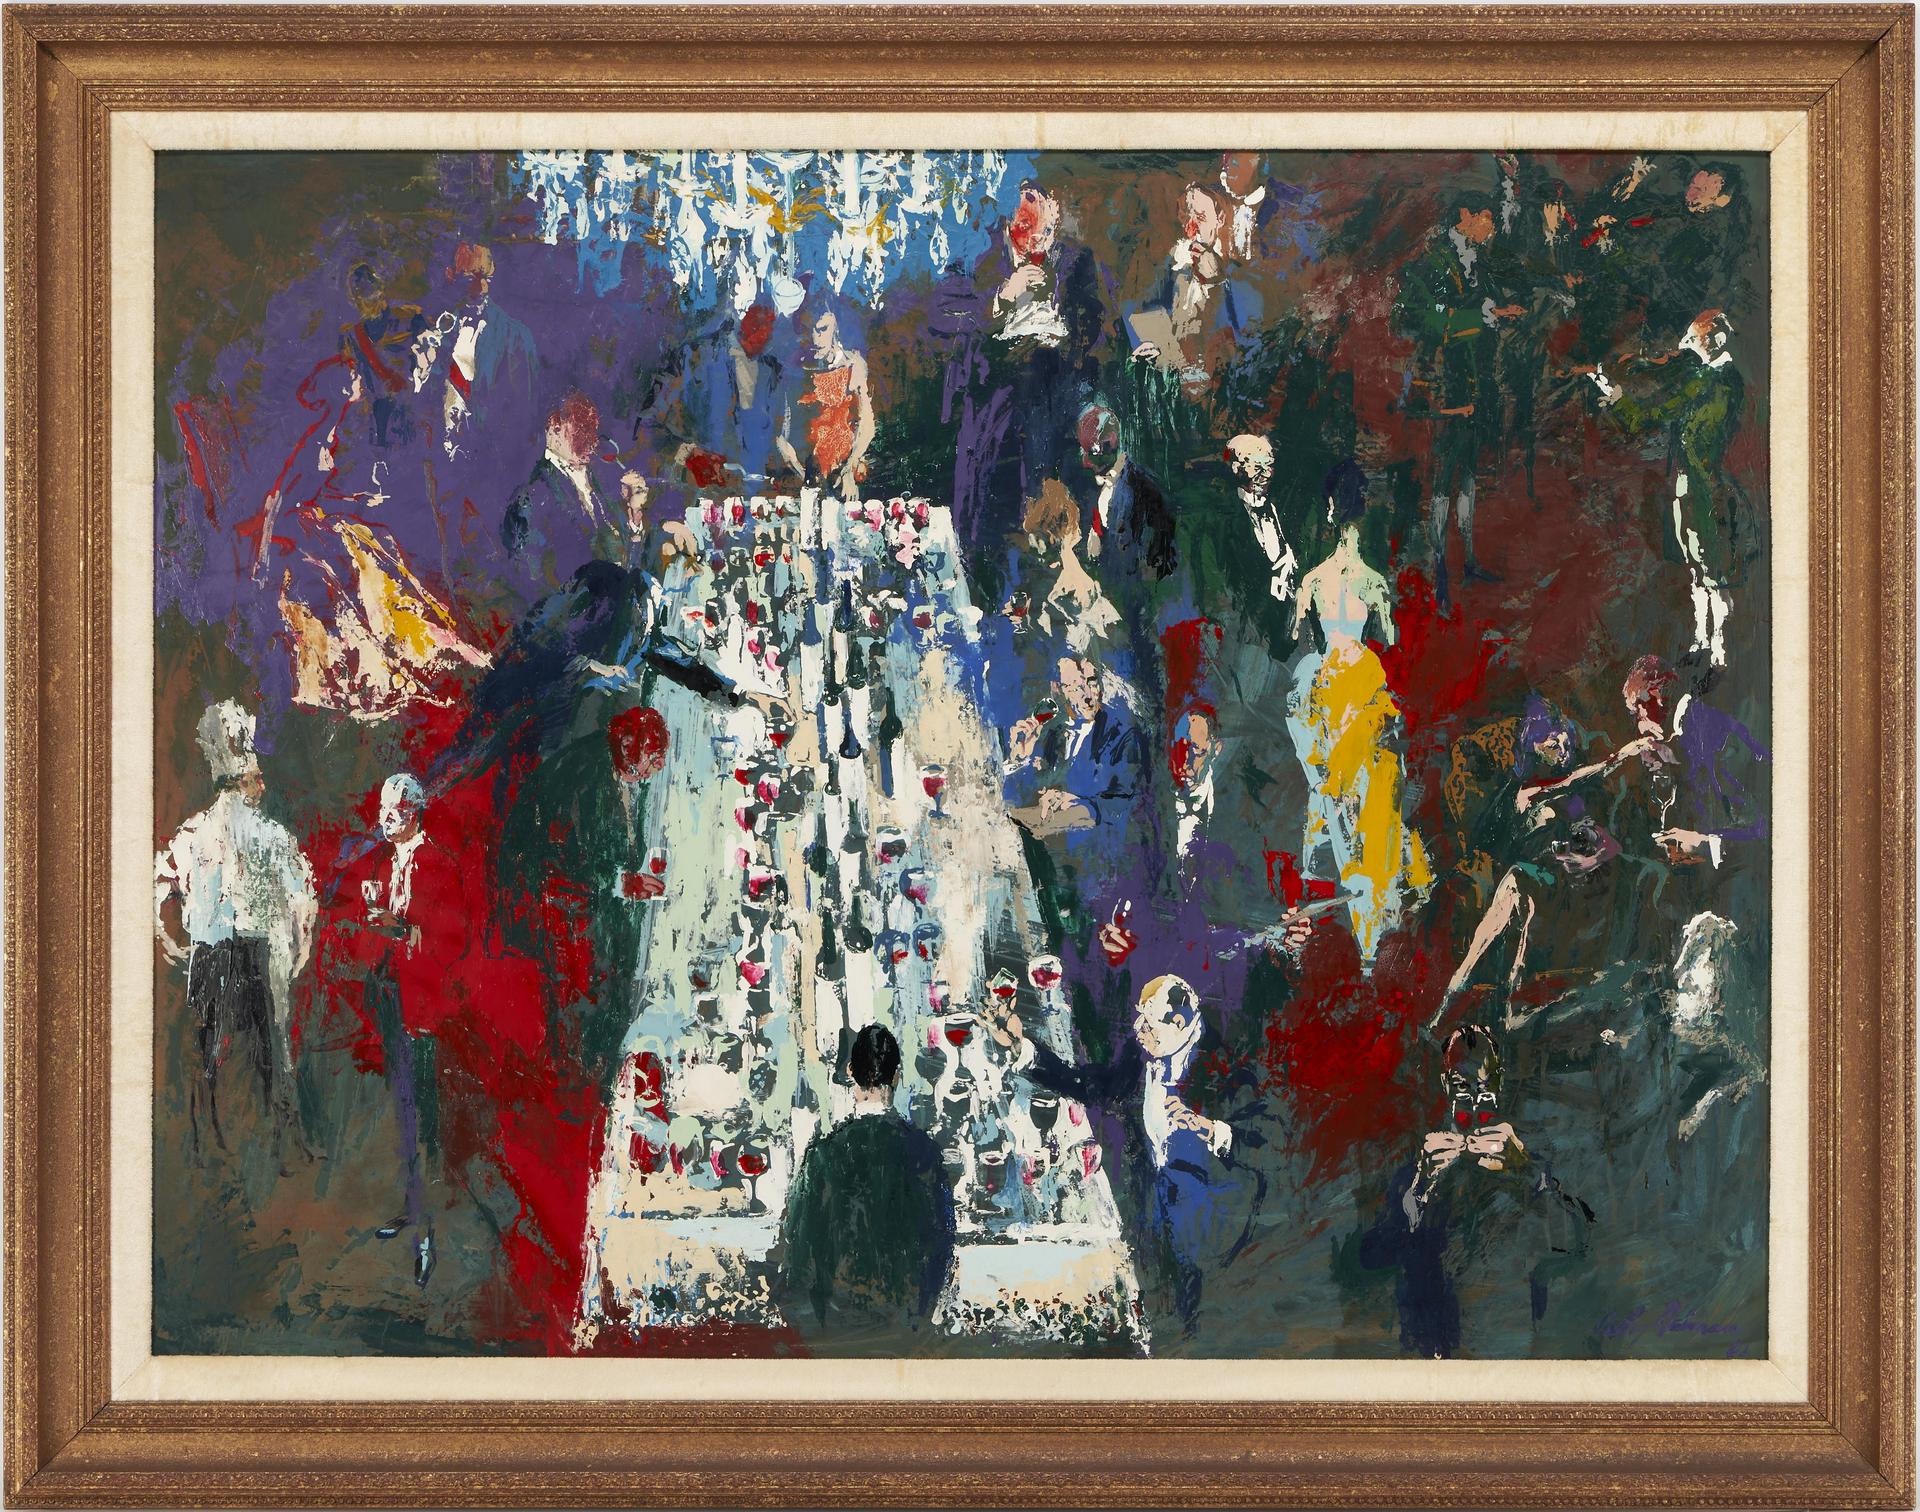 Original 1965 Leroy Neiman painting, est. $40,000-$44,000